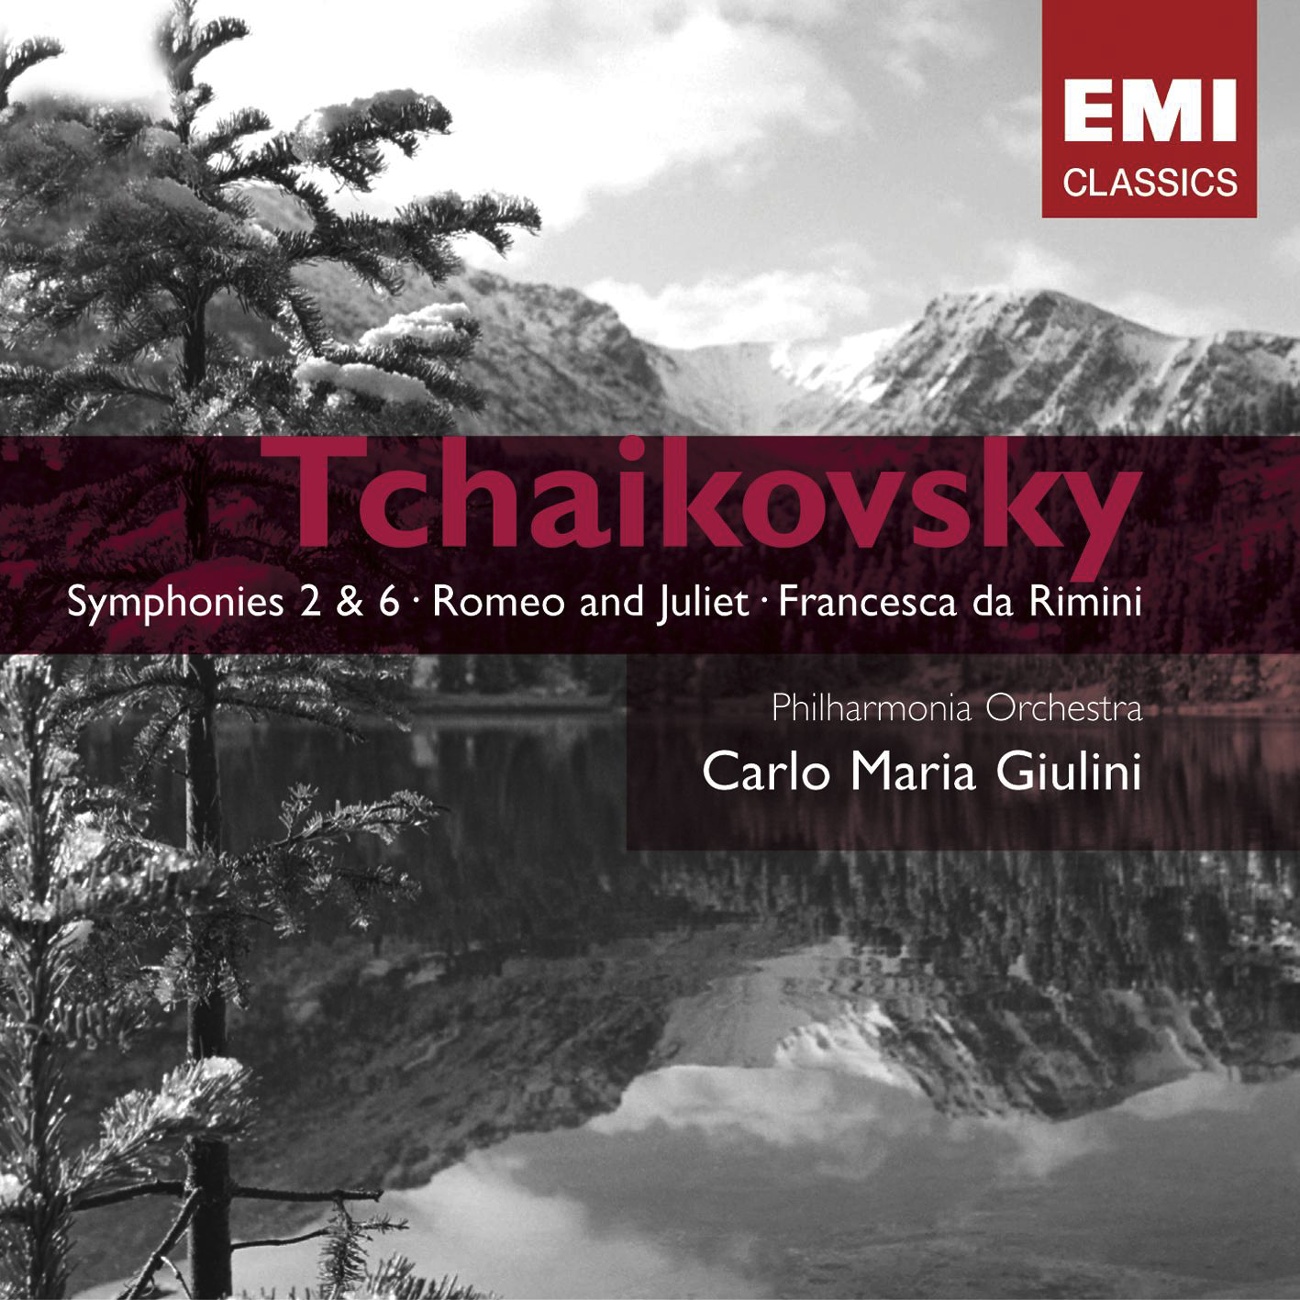 Symphony No. 2 in C minor, Op. 17 ("Little Russian") (2005 Digital Remaster): I.   Andante sostenuto - Allegro vivo